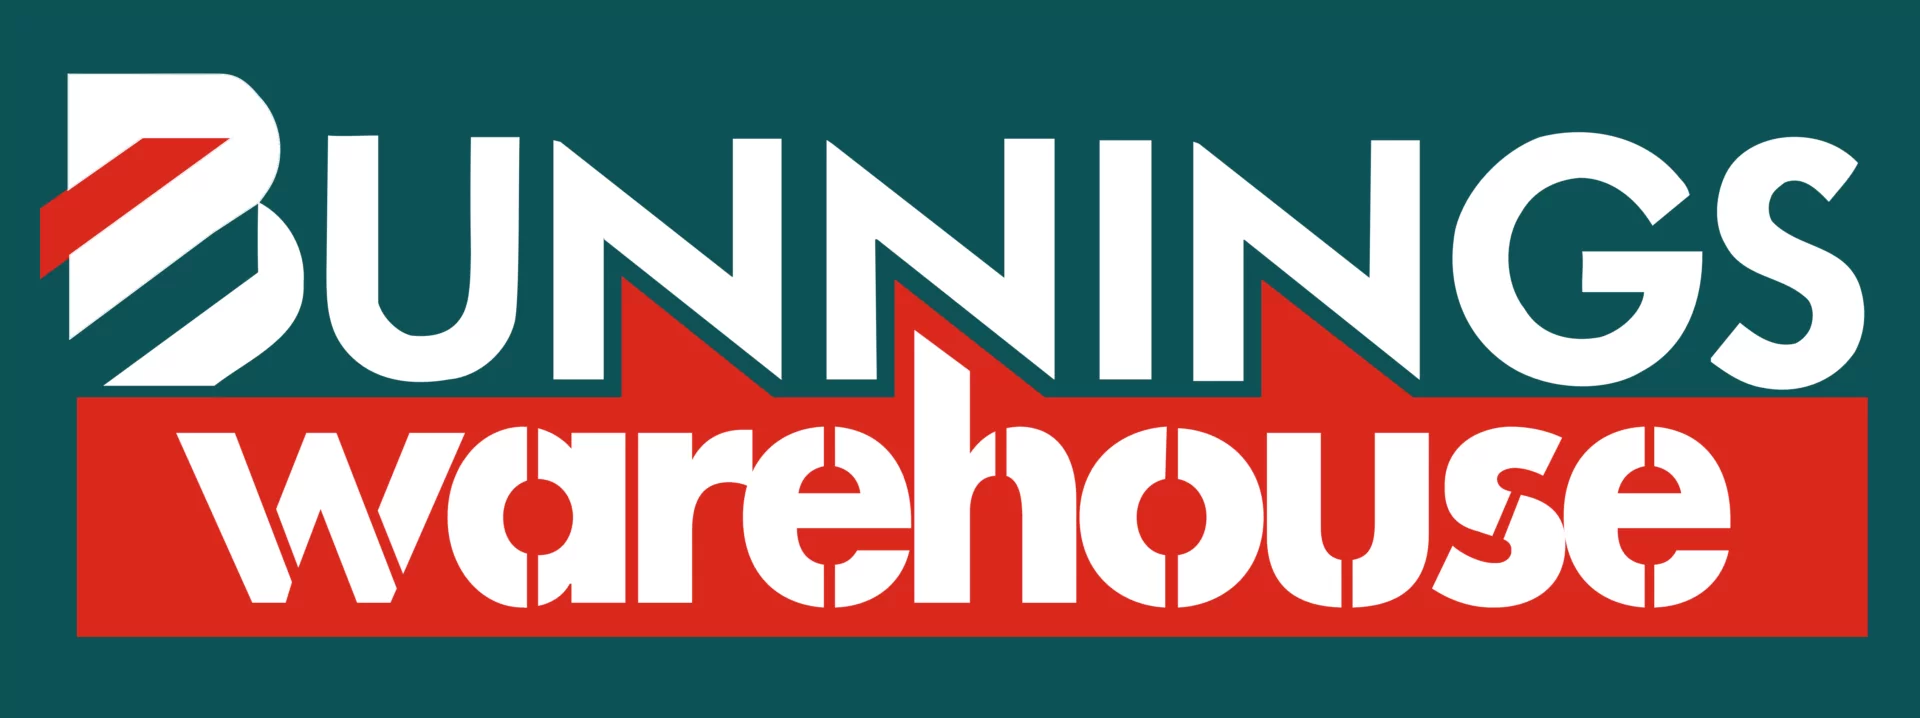 Bunnings Warehouse logo background